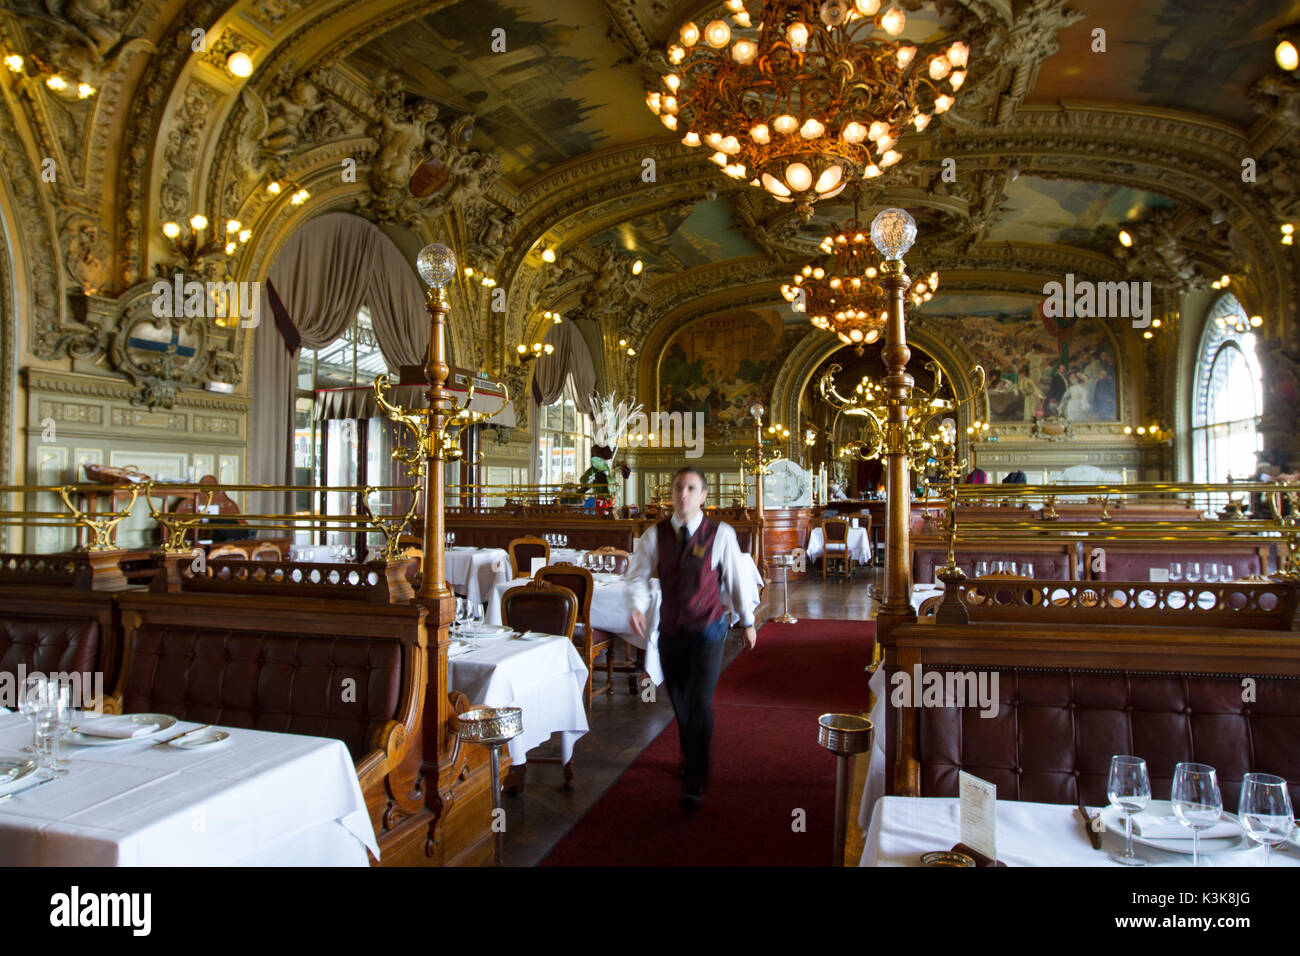 The historic 19th century 'Le Train Bleu' restaurant located at the Gare de Lyon, Paris France Stock Photo